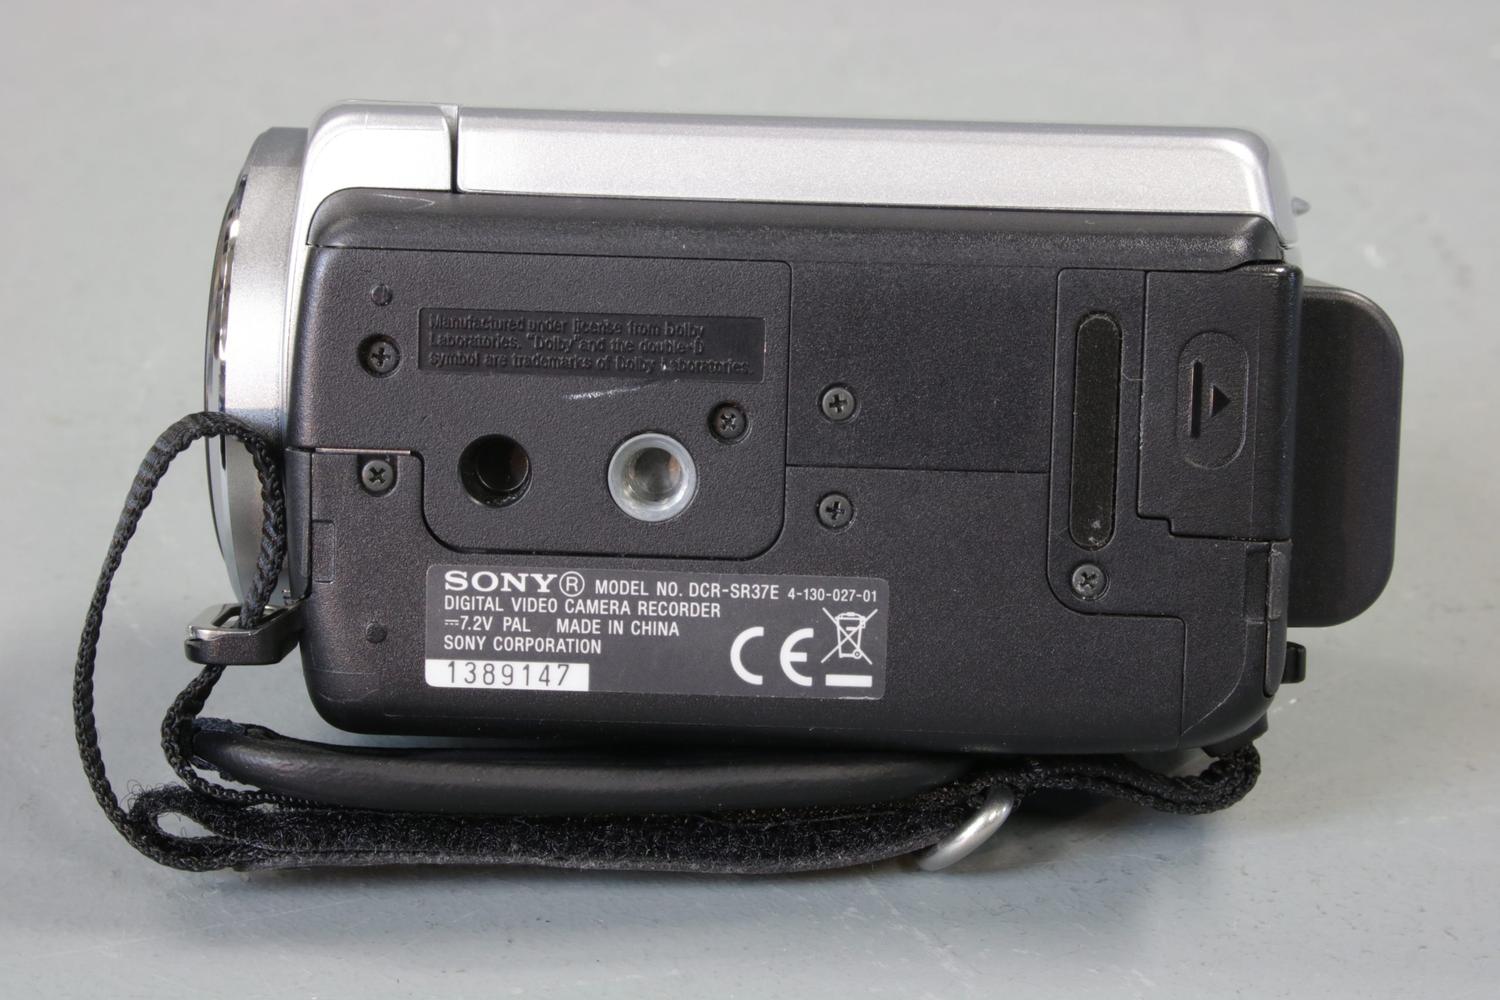 Sony Handycam DCR-SR37 Hard disk drive storage SD camcorder